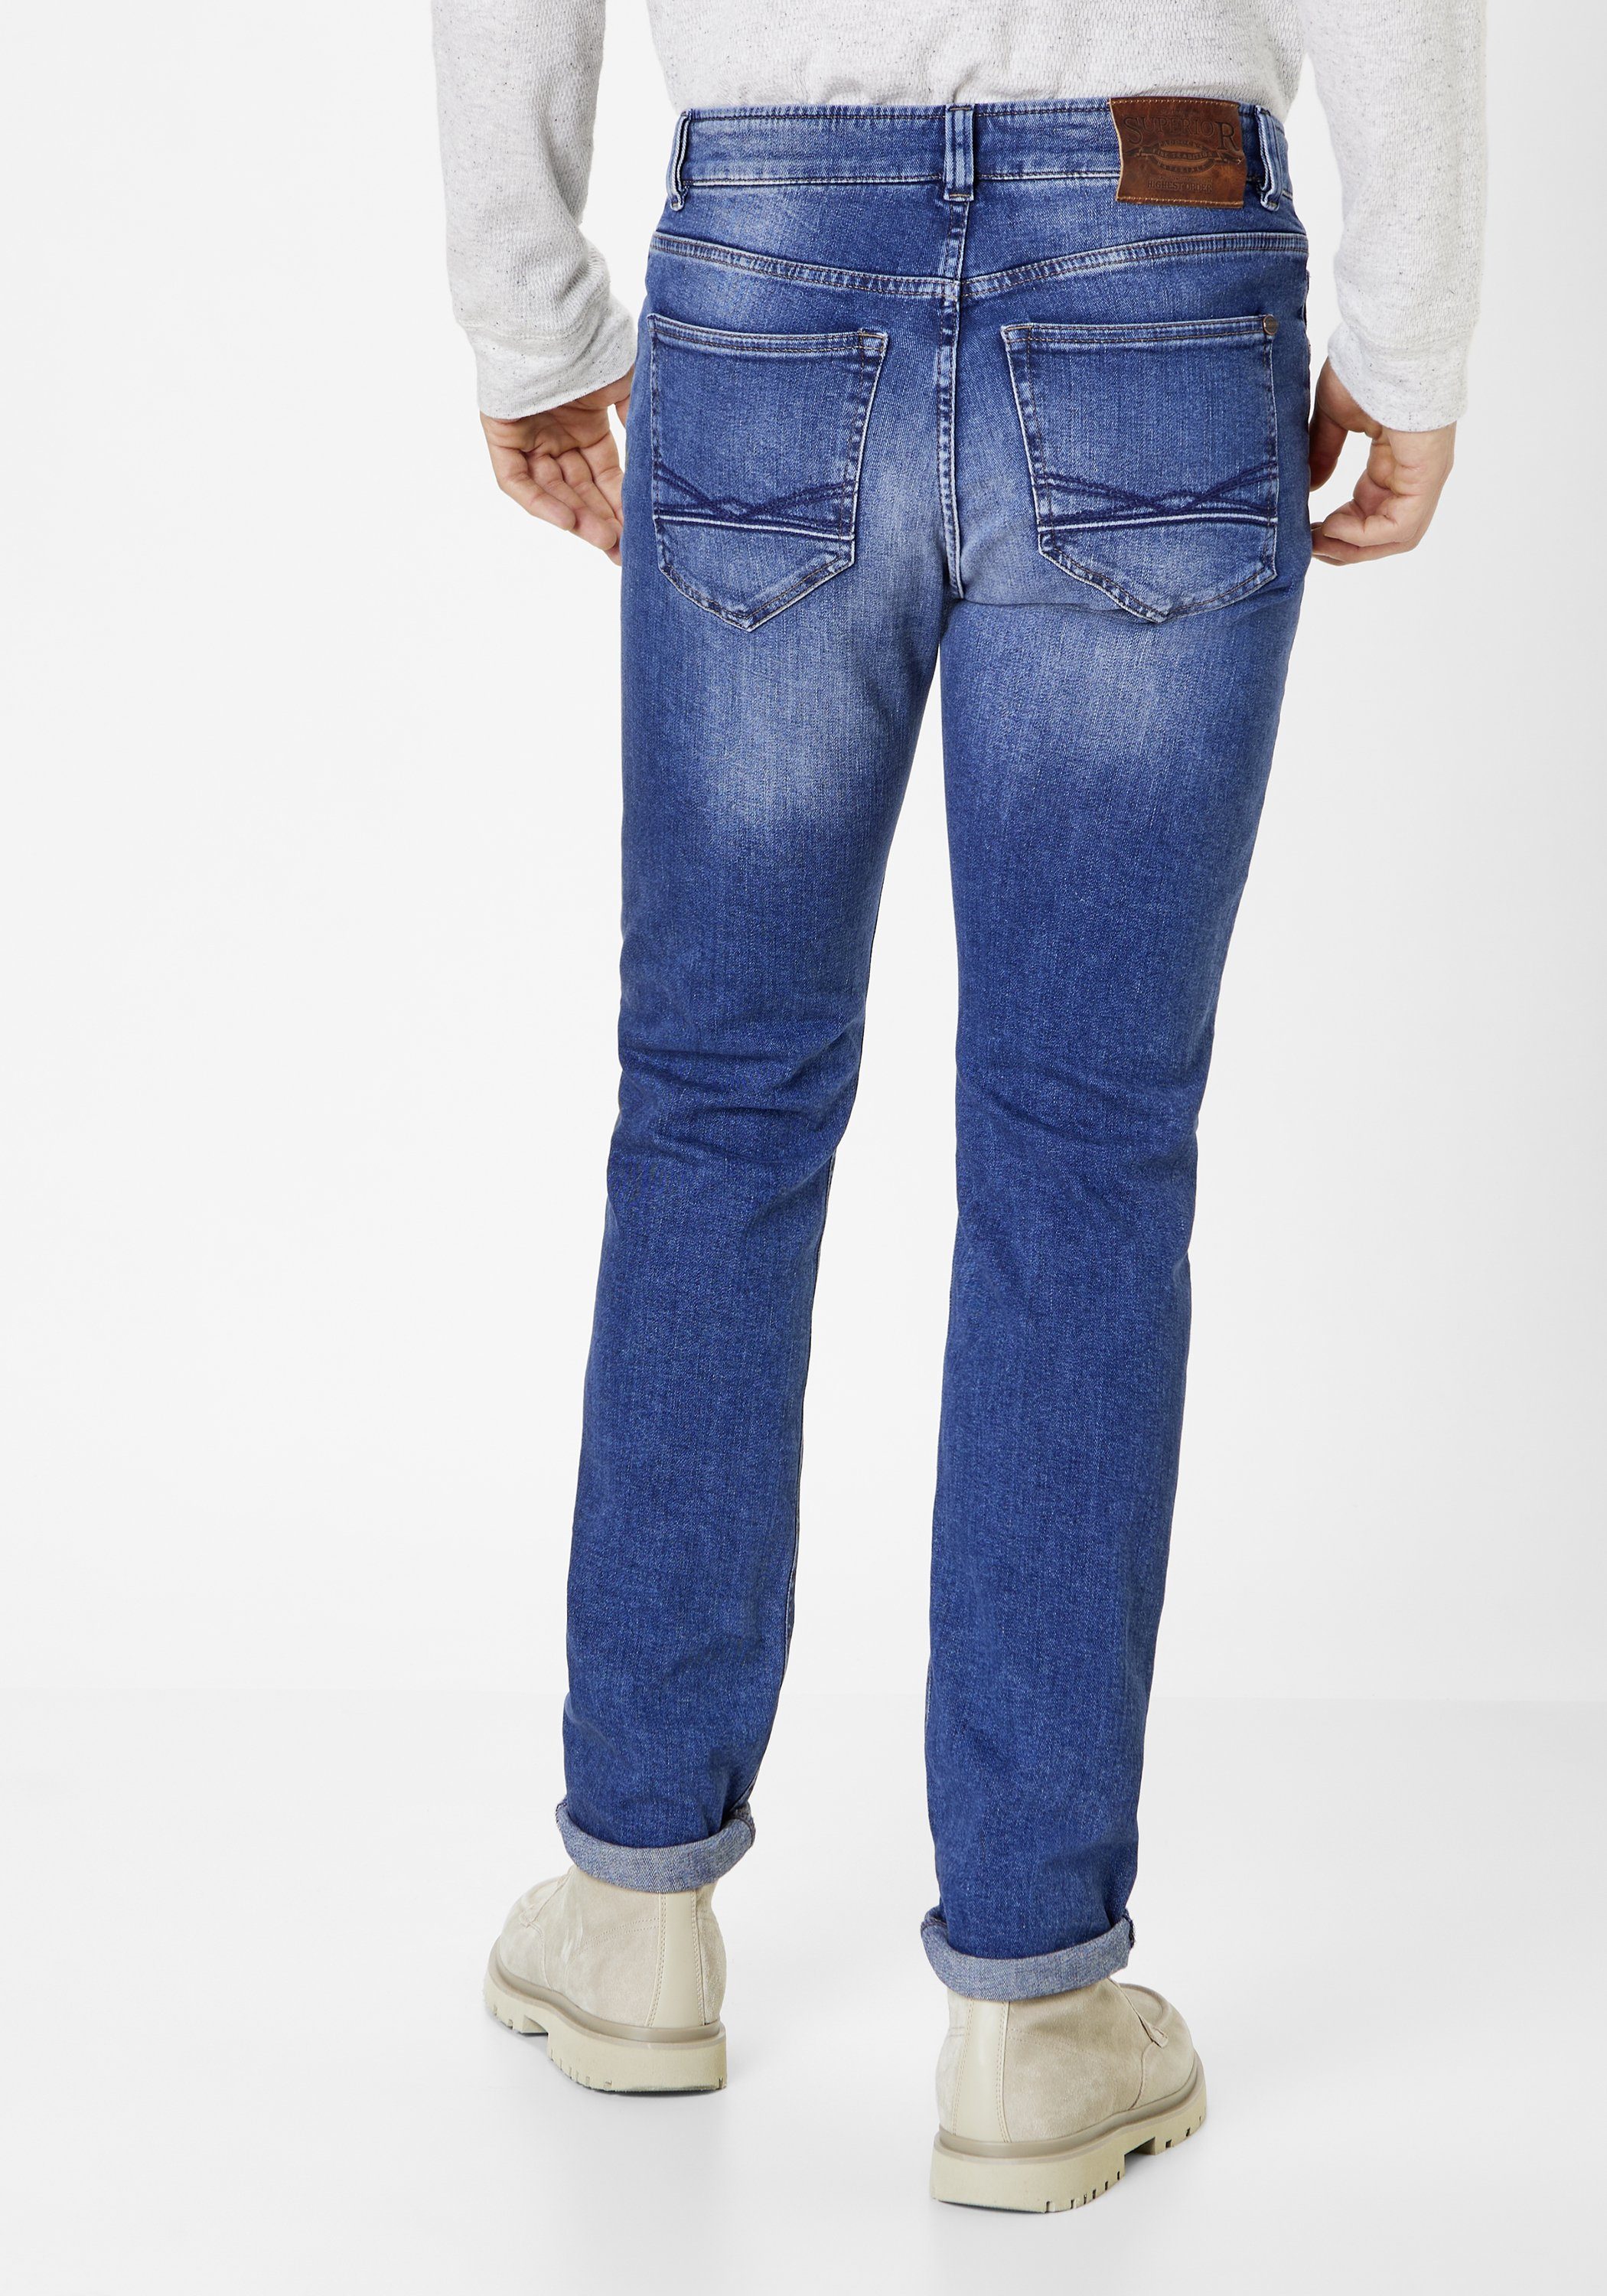 Paddock's 5-Pocket-Jeans DUKE Superior Jeans wash vintage blue dark Straight-Fit